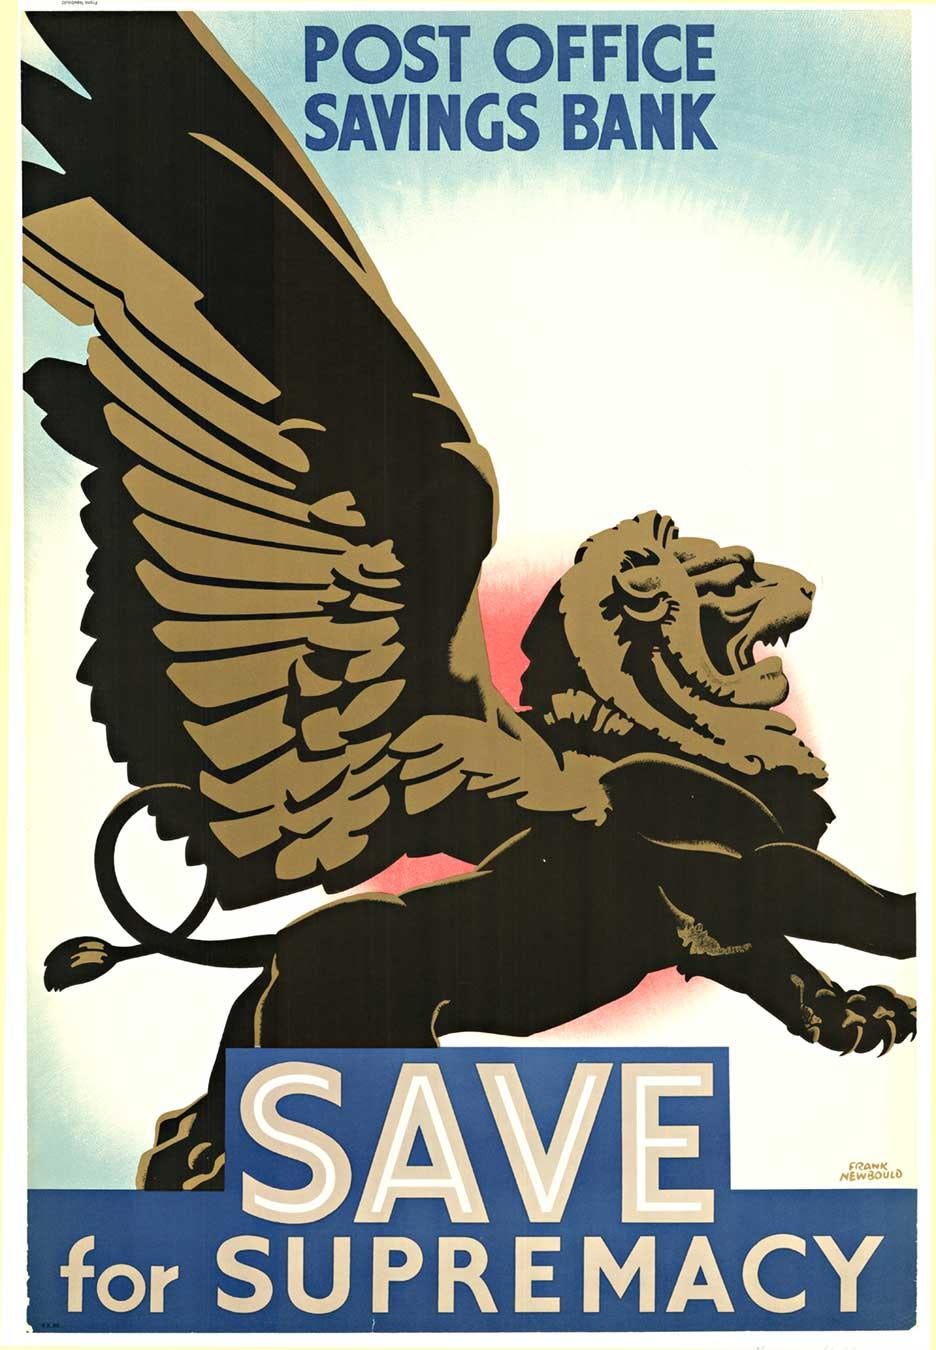 Frank Newbould Animal Print - Original "Post Office Savings Bank, Save for Supremacy" vintage British poster